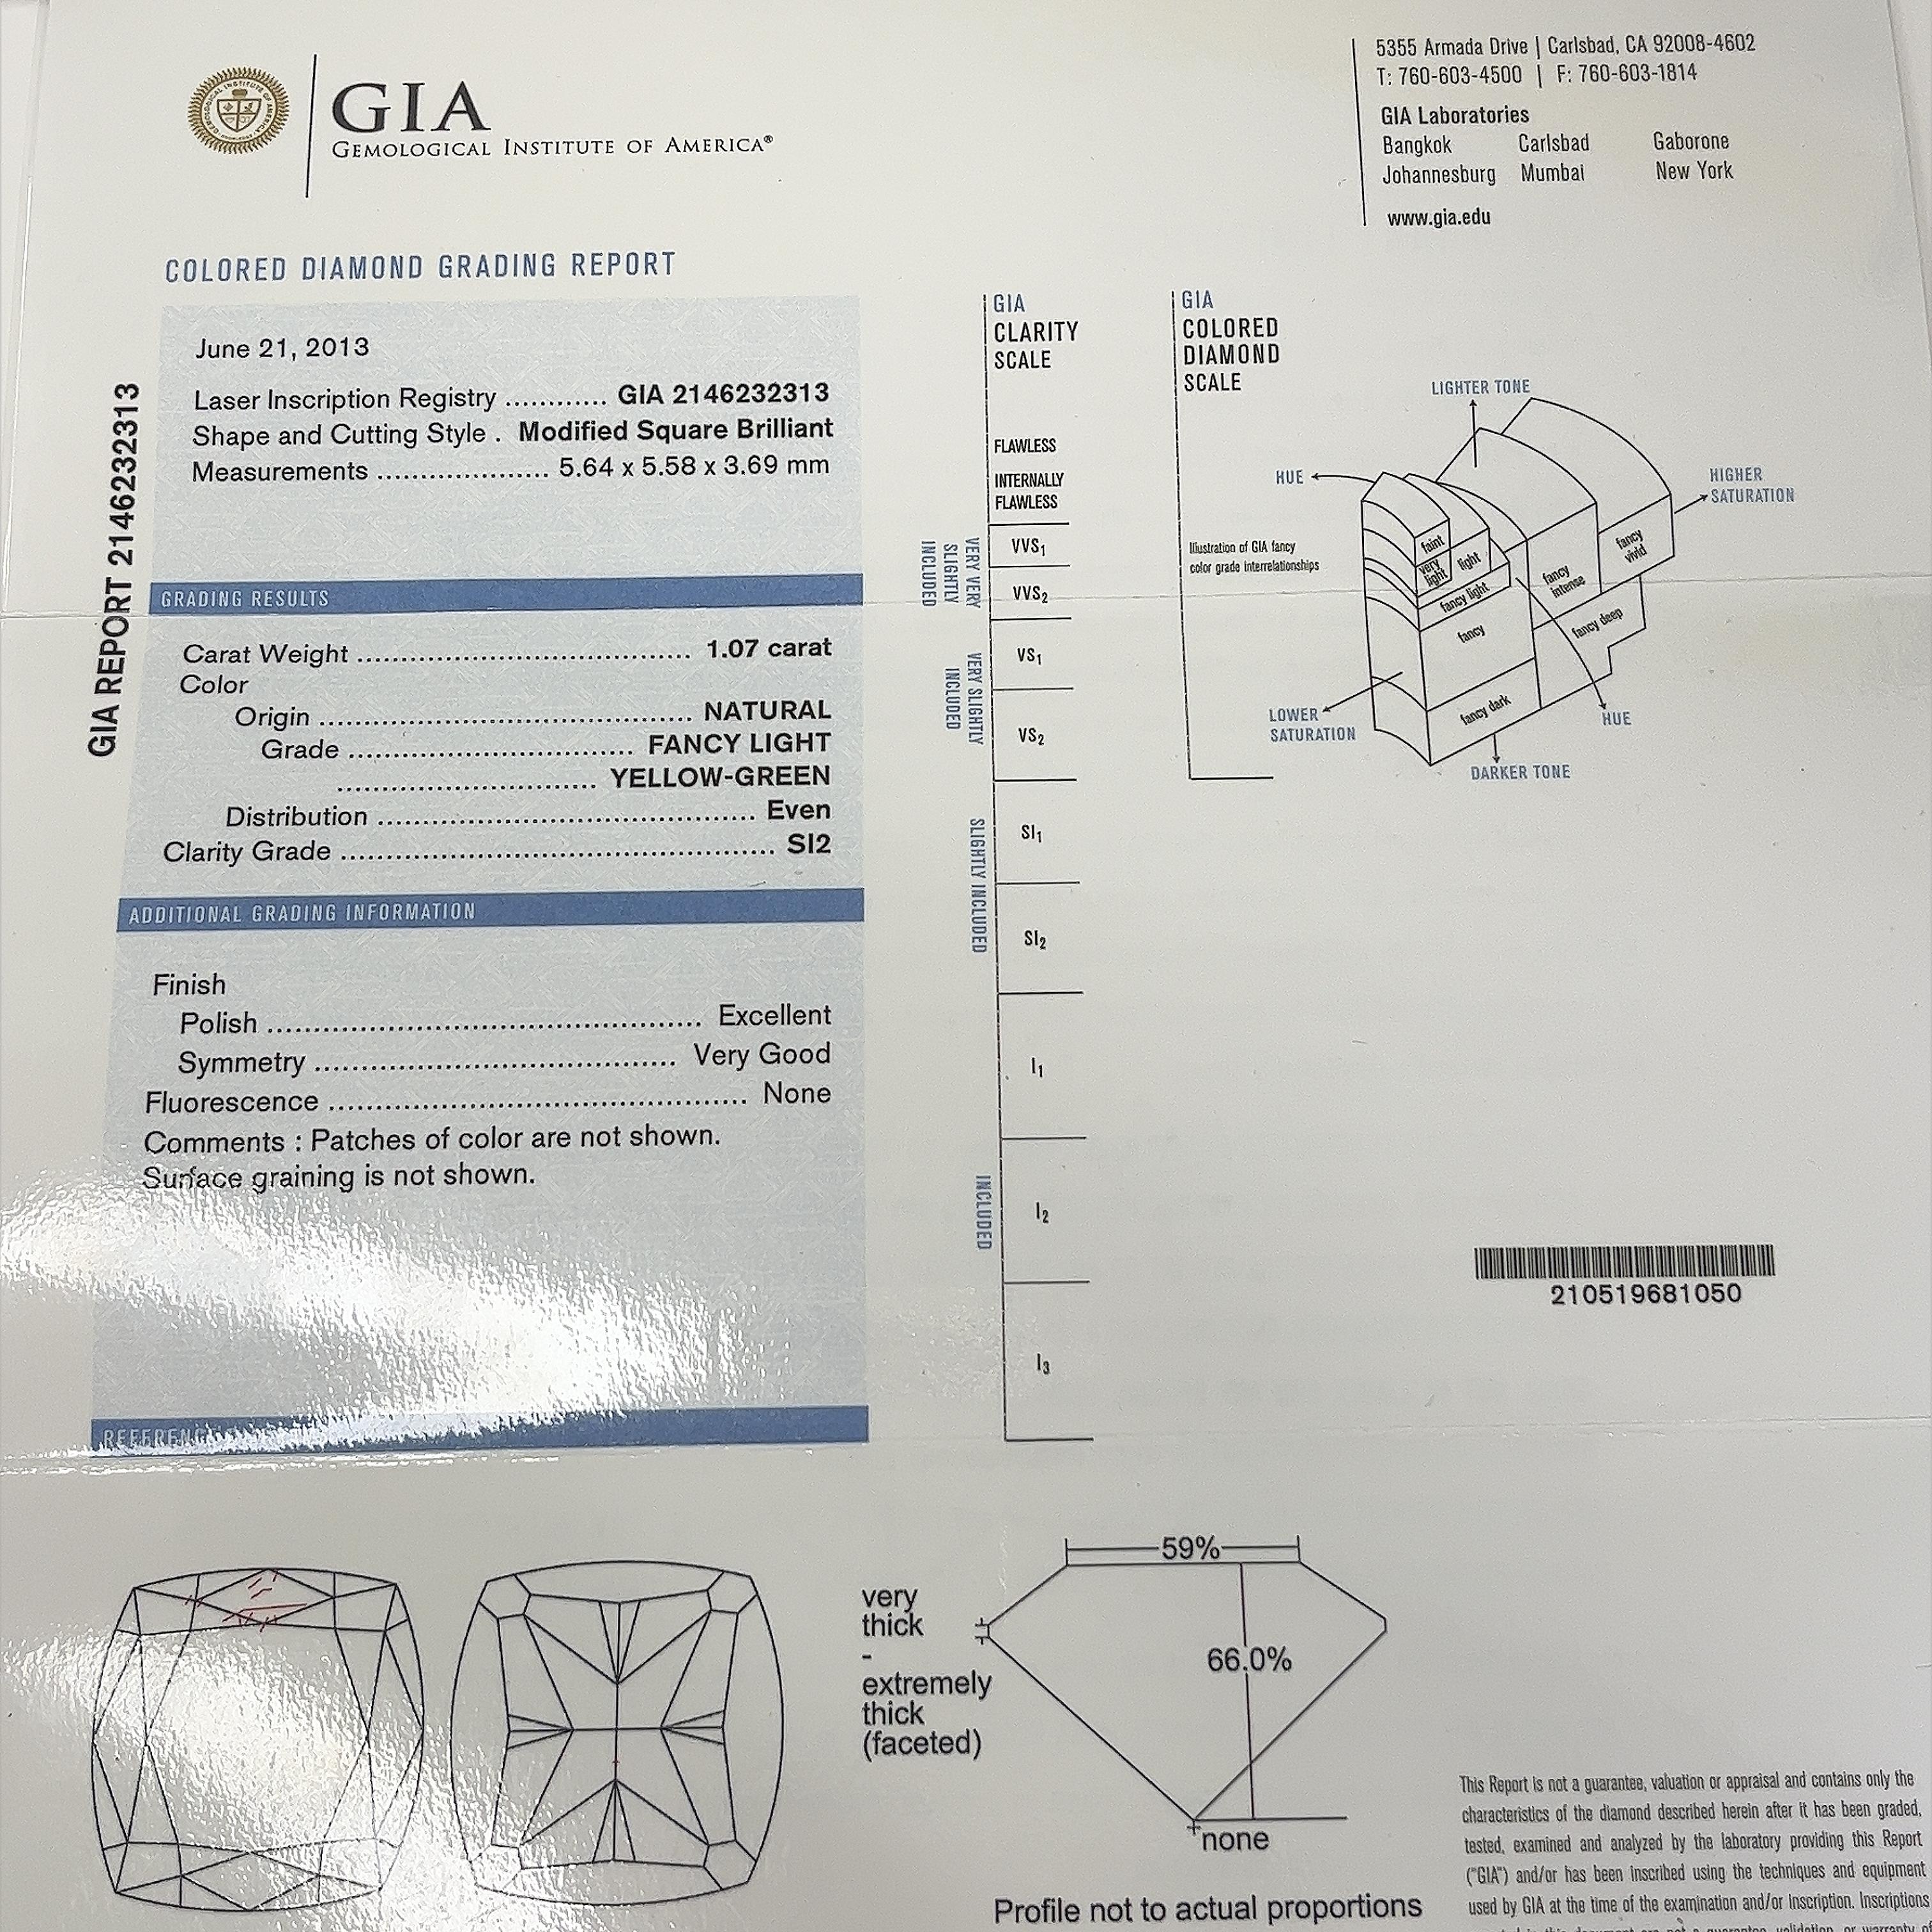  Diamant non serti de 1,07 carat de couleur jaune clair et vert fantaisie certifié GIA Unisexe 